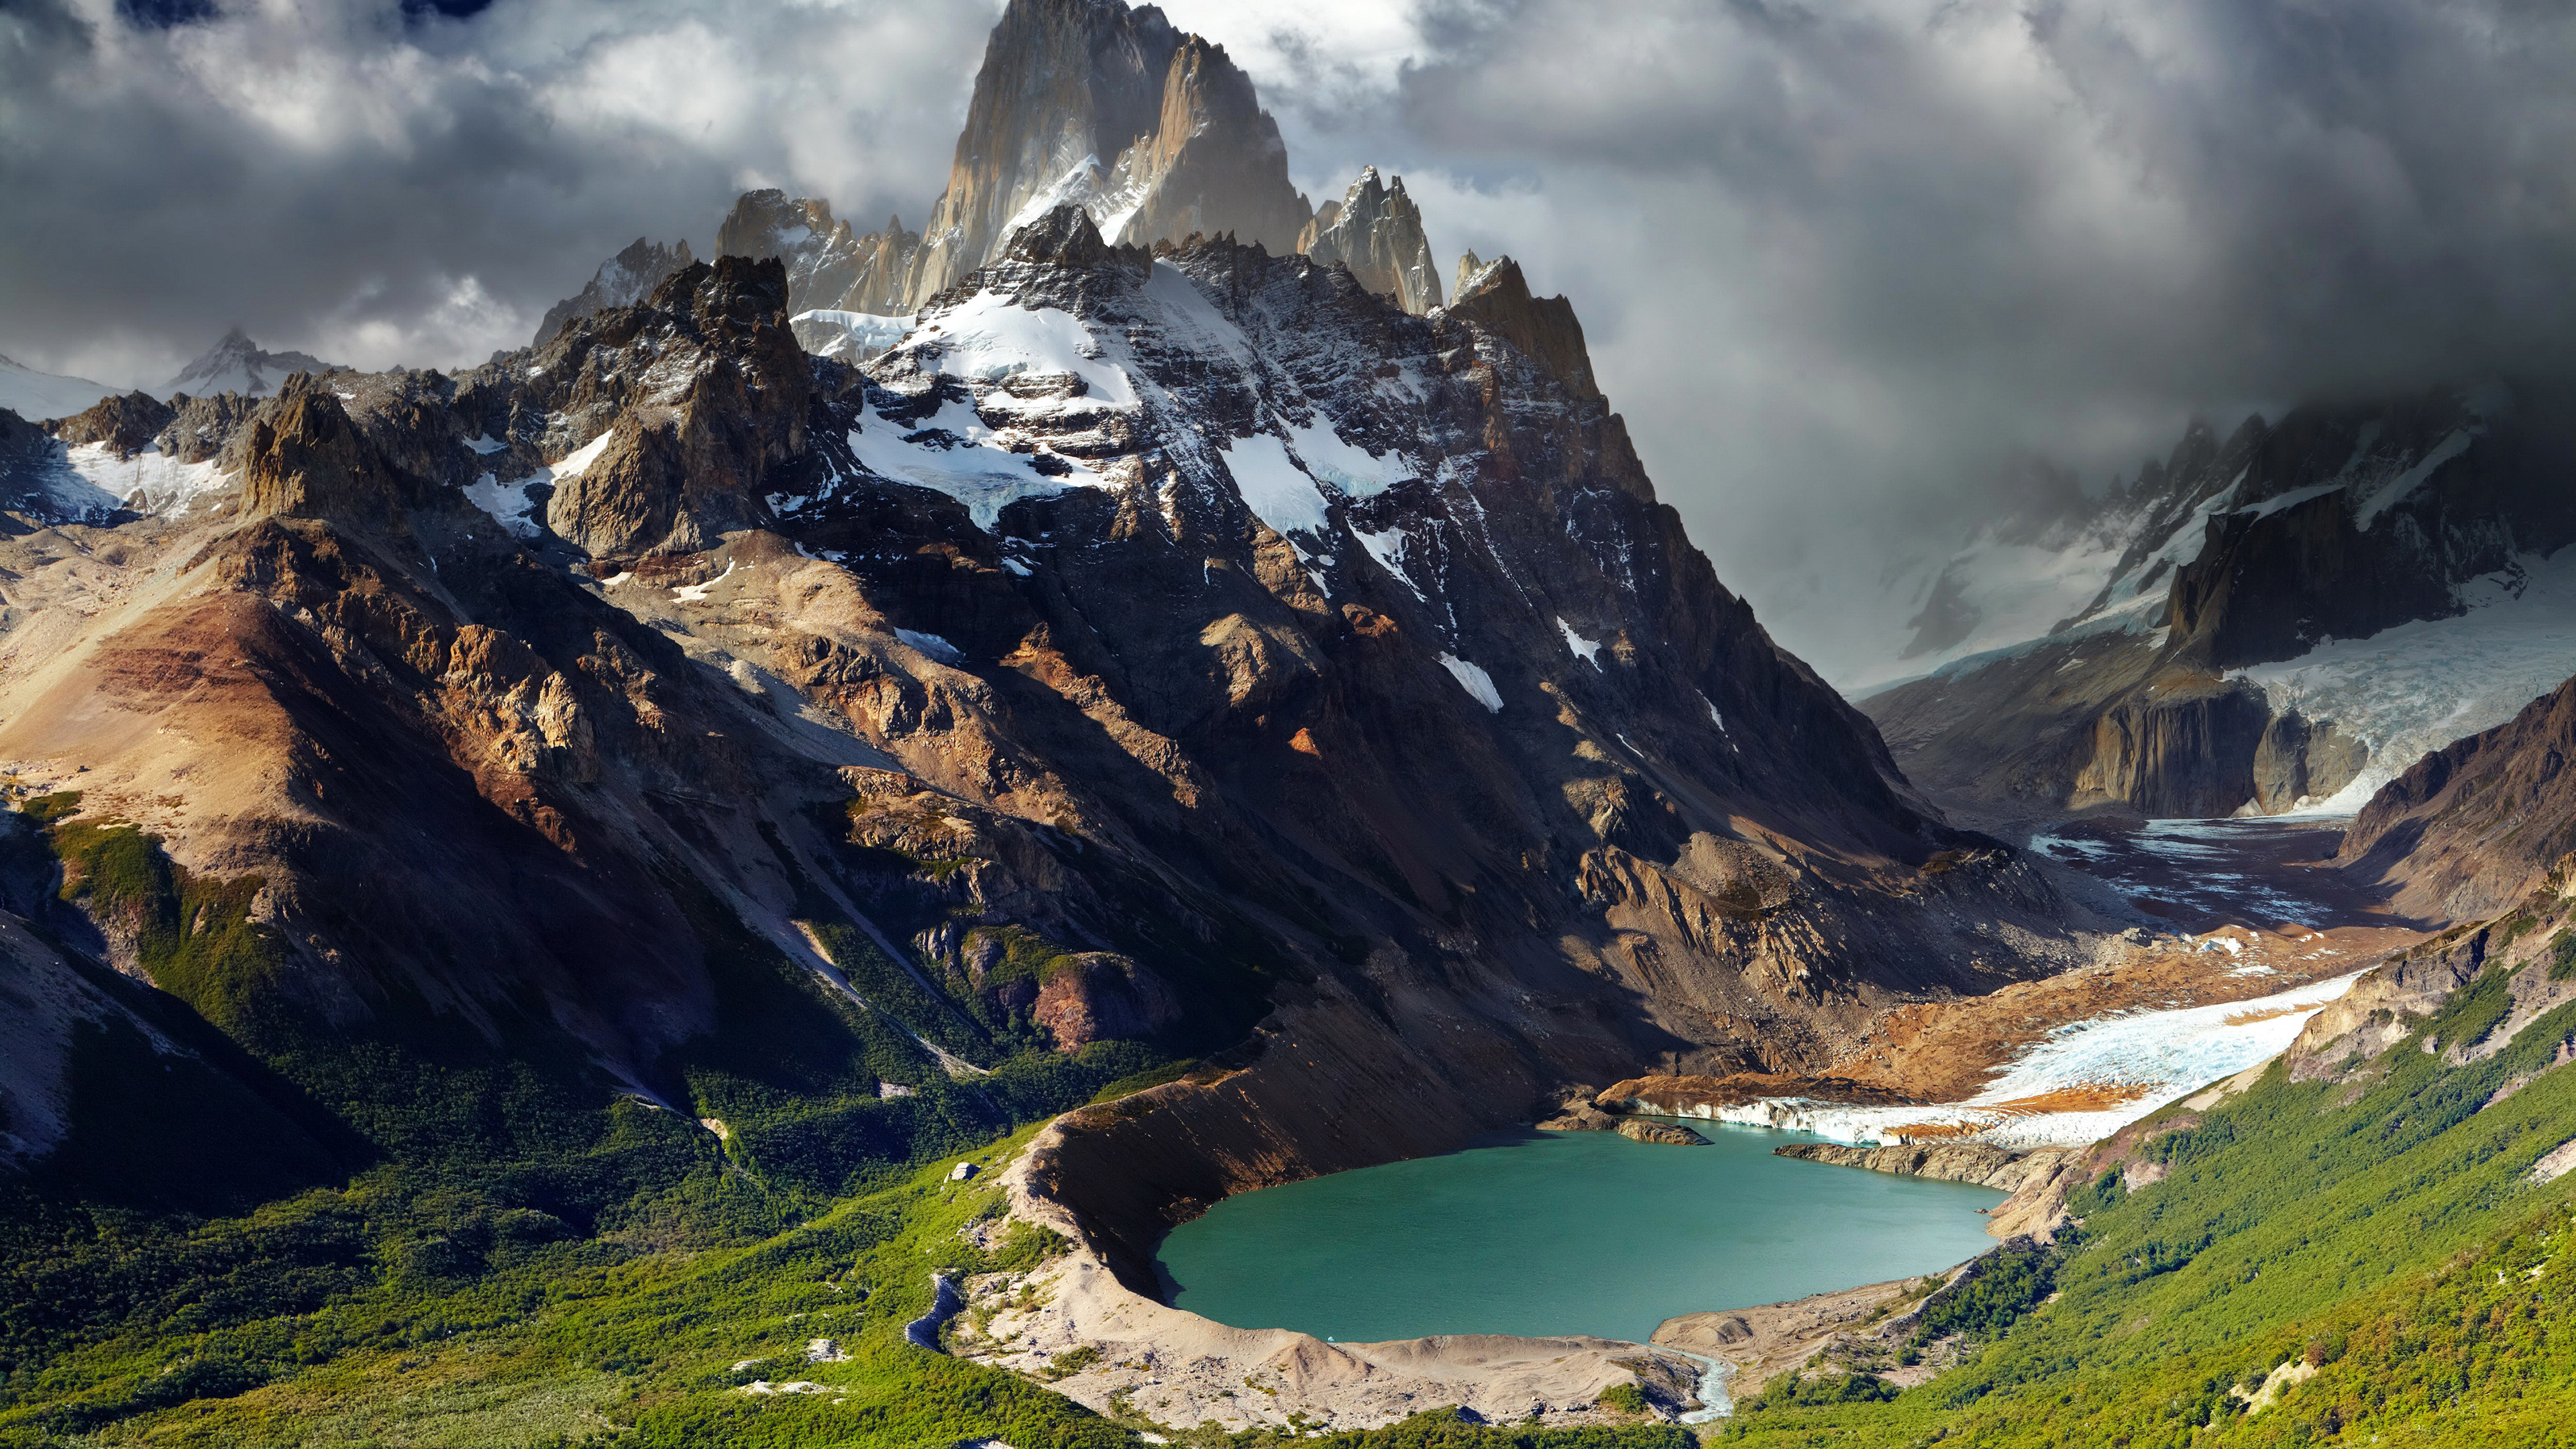 Fitz Roy, Patagonia, Argentina, Mountain Peak, Glacier mountains, Snow covered, Landscape, Cloudy Sky, Lake, Valley, 4k Free deskk wallpaper, Ultra HD